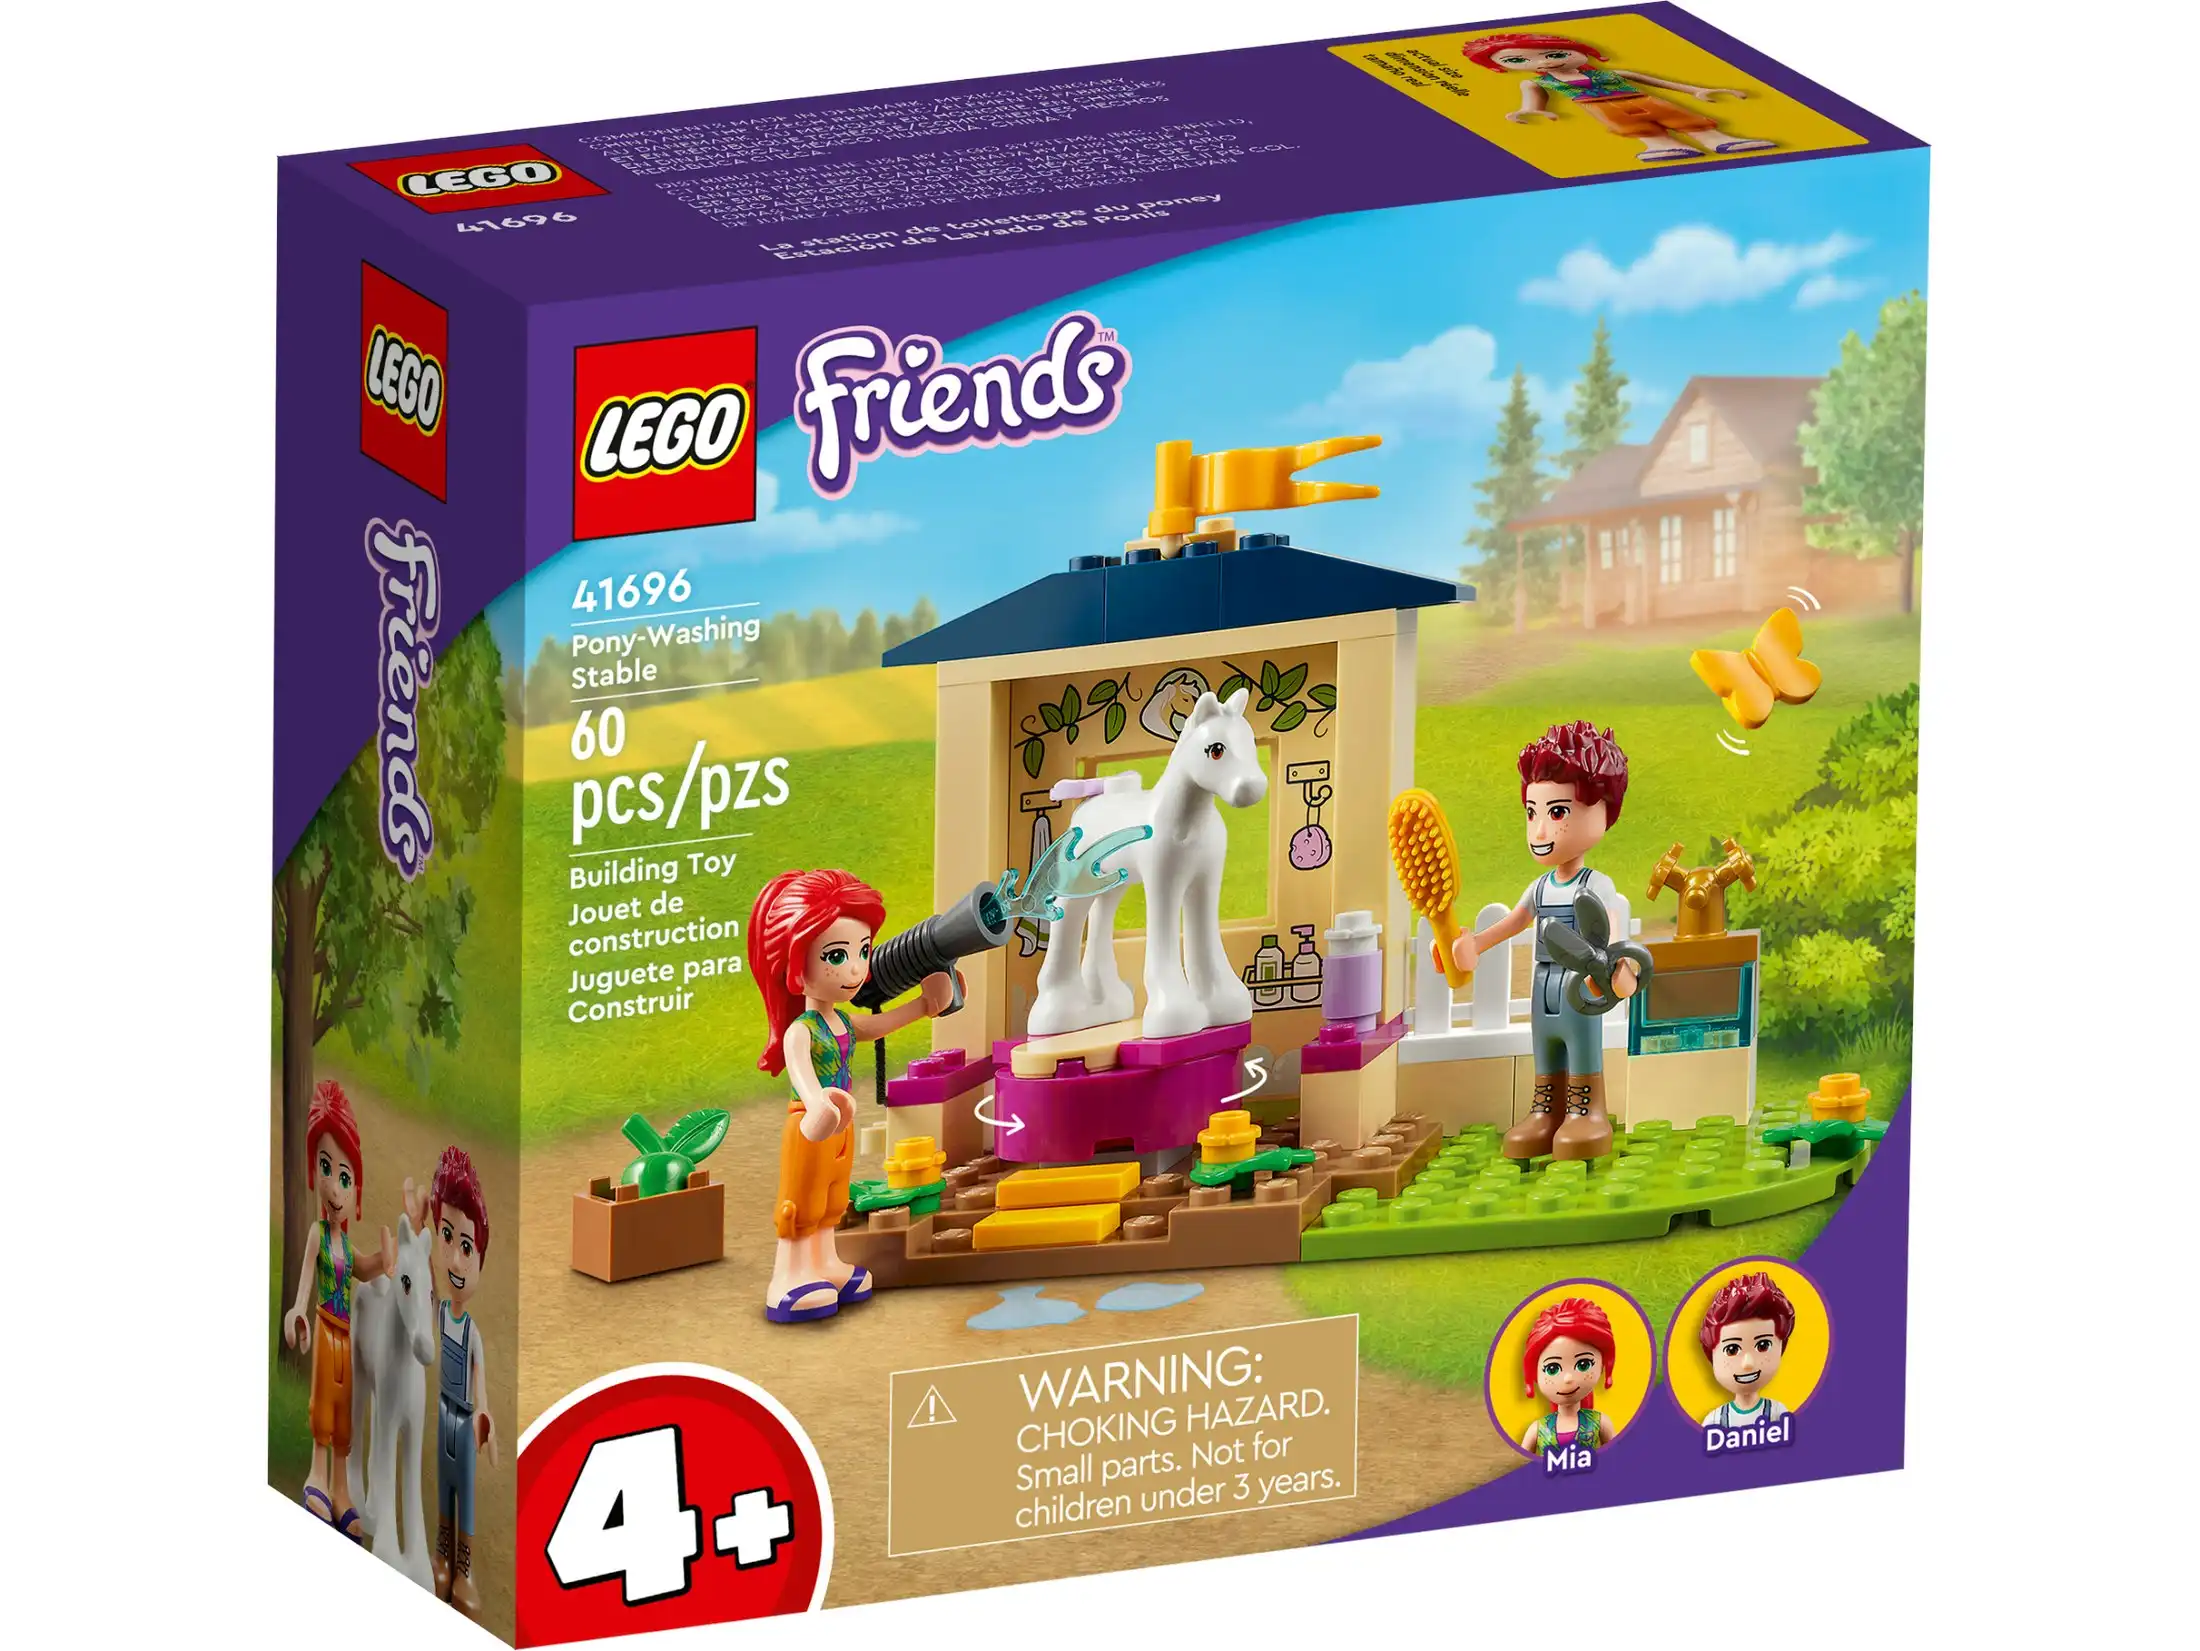 LEGO 41696 Pony-Washing Stable - Friends 4+